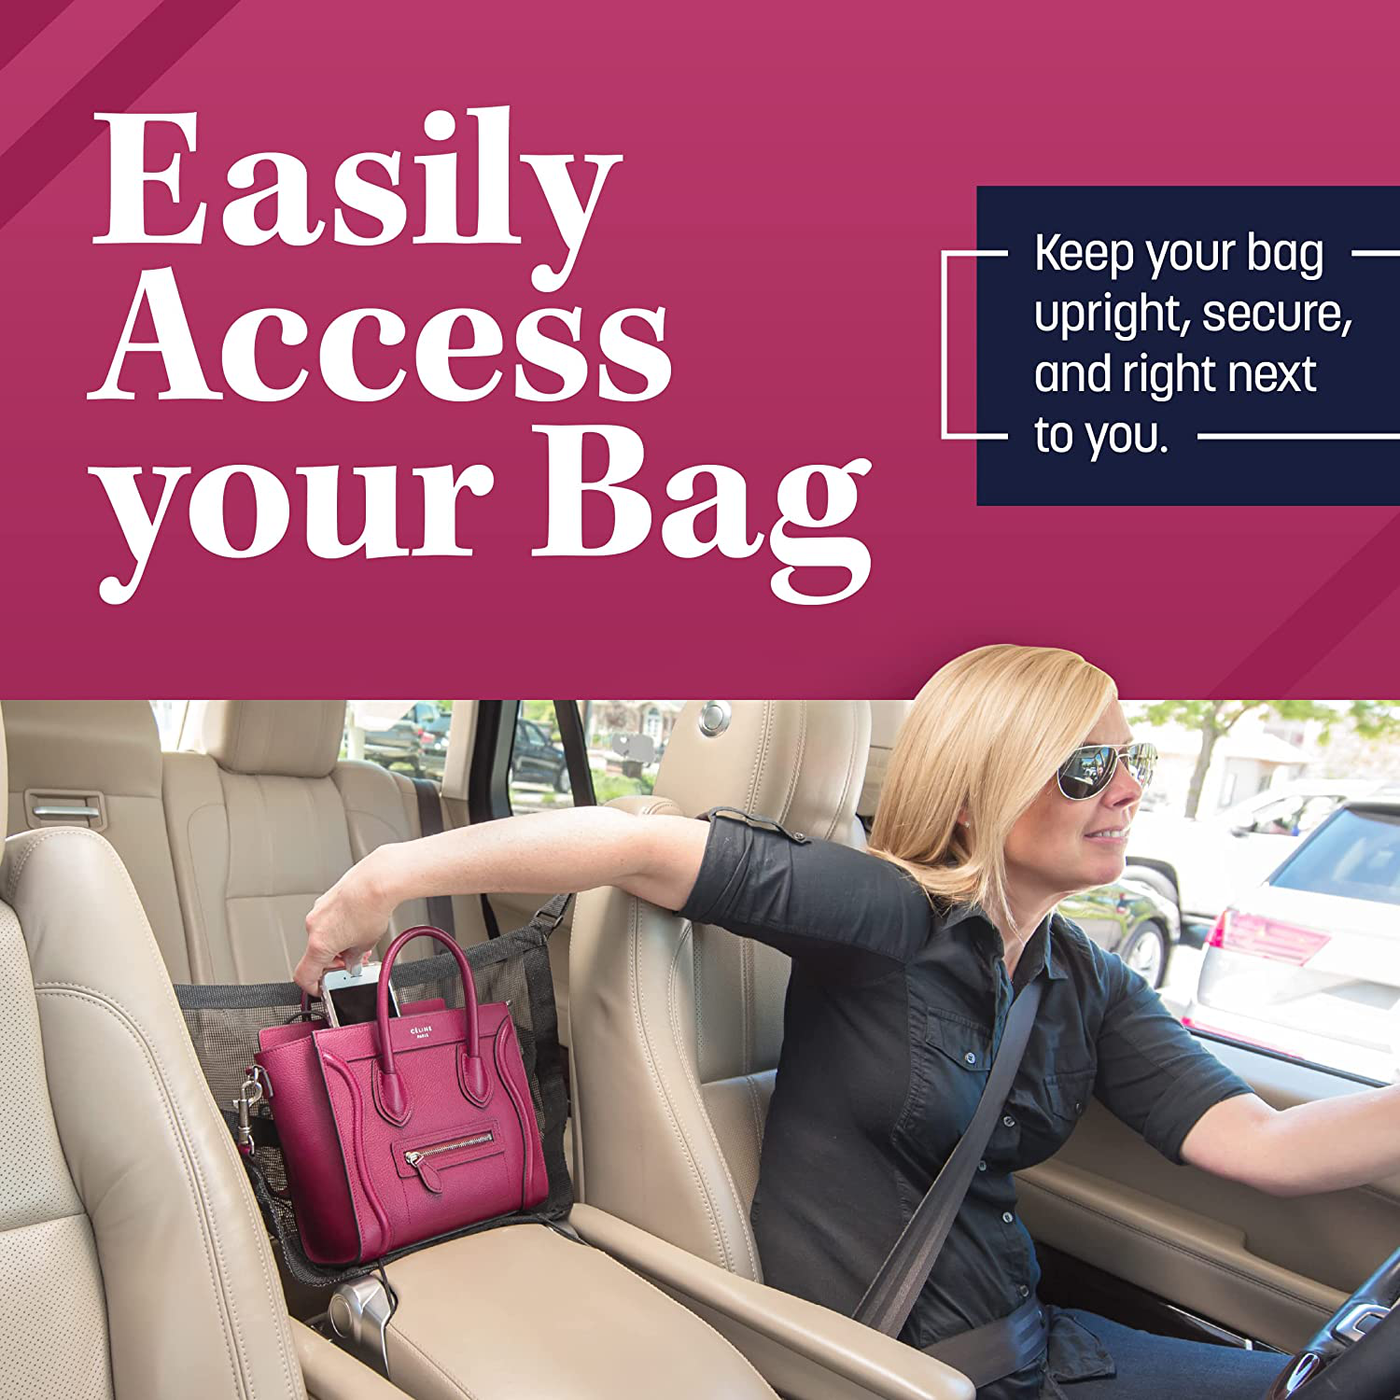 Car Cache Purse Holder for Car - Net Pocket Organizer for Handbag Storage Between Seats